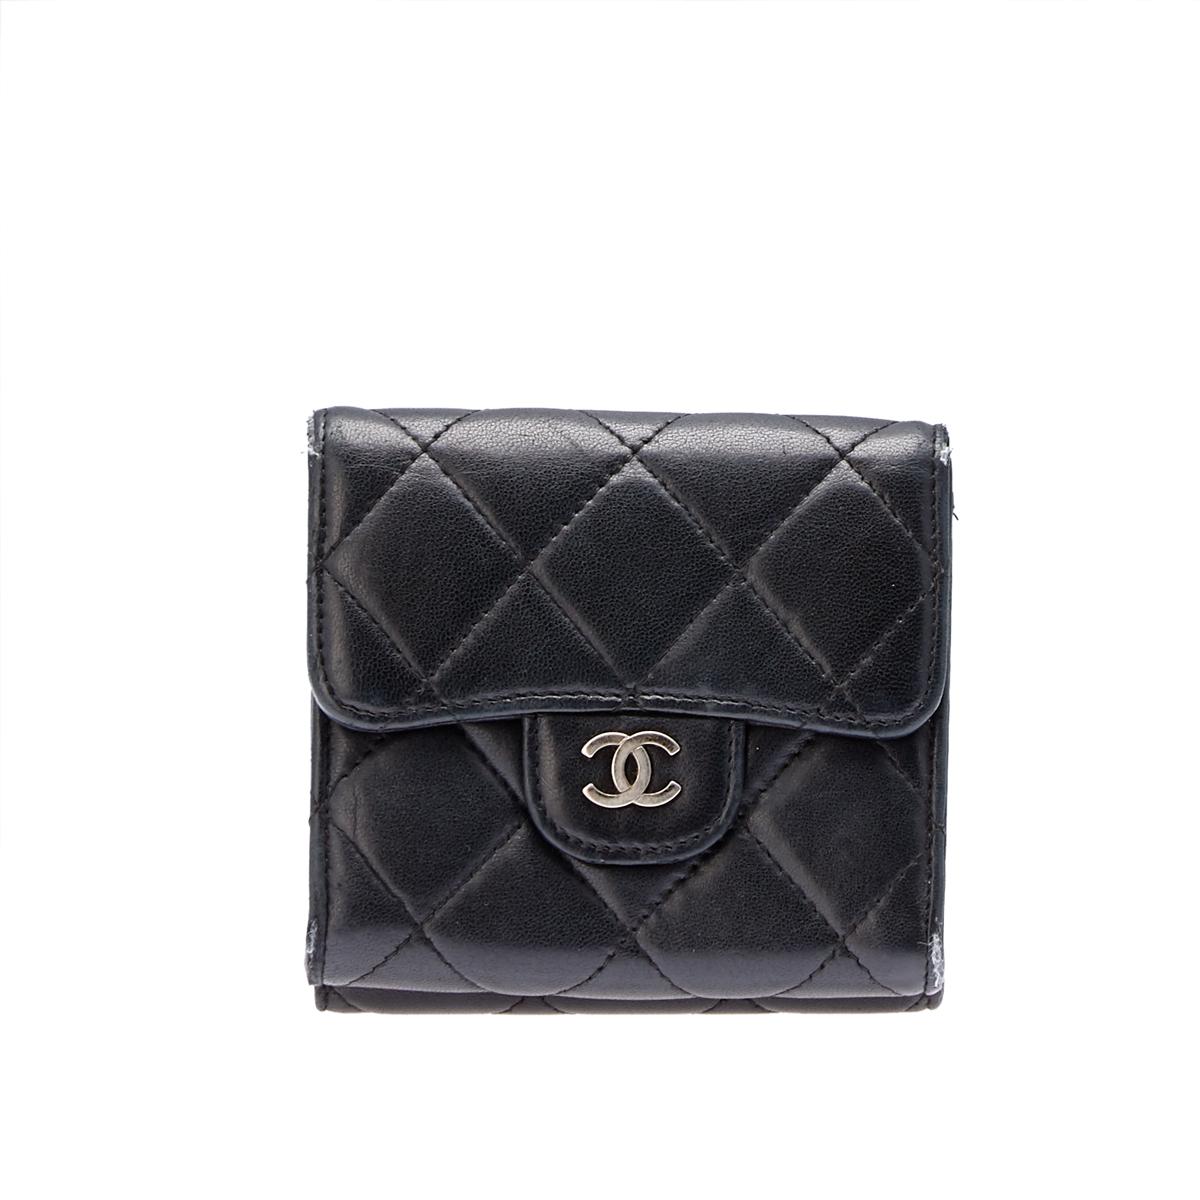 Chanel Wallet - Price Estimate: $550 - $750